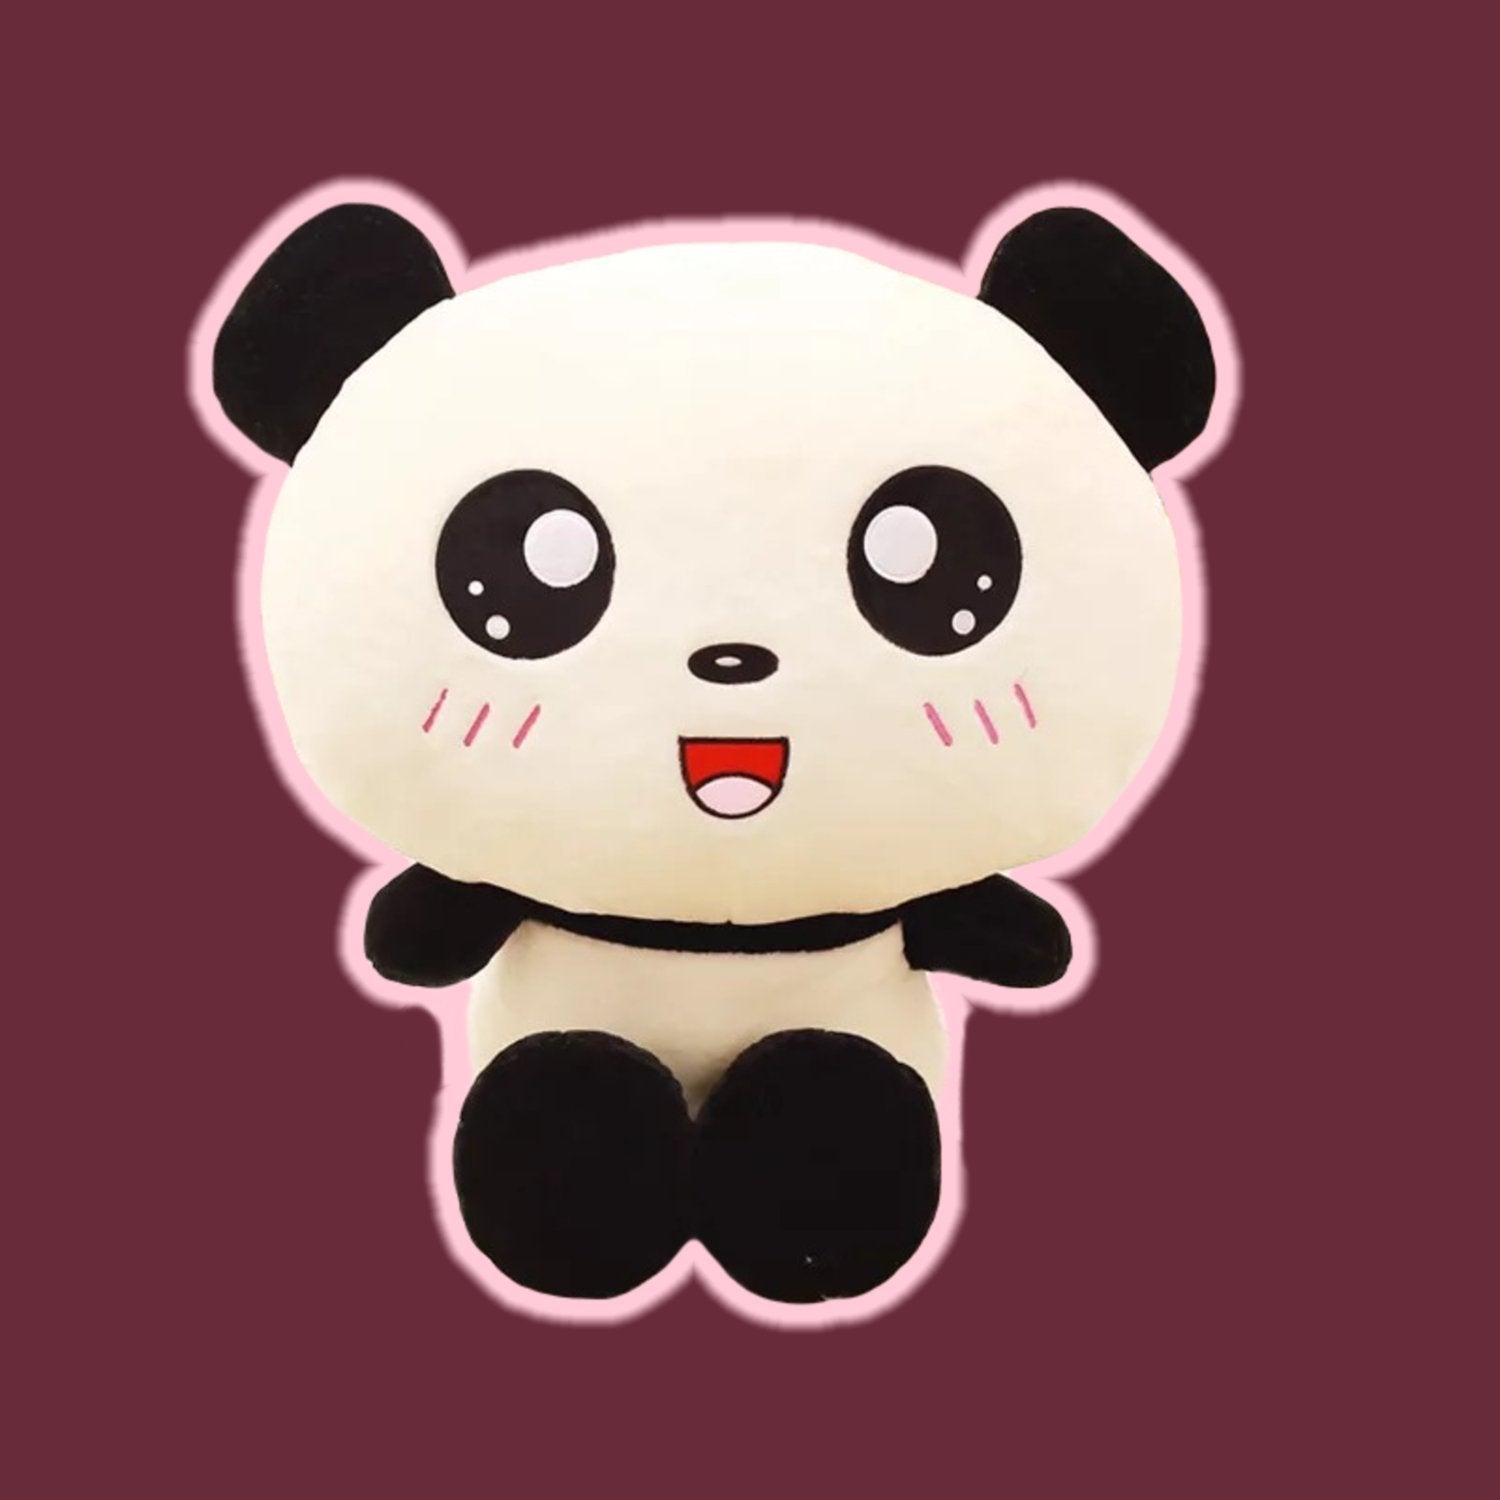 omgkawaiii 🐰 Land Animals Plushies Giant Panda Plush Stuffed Animals